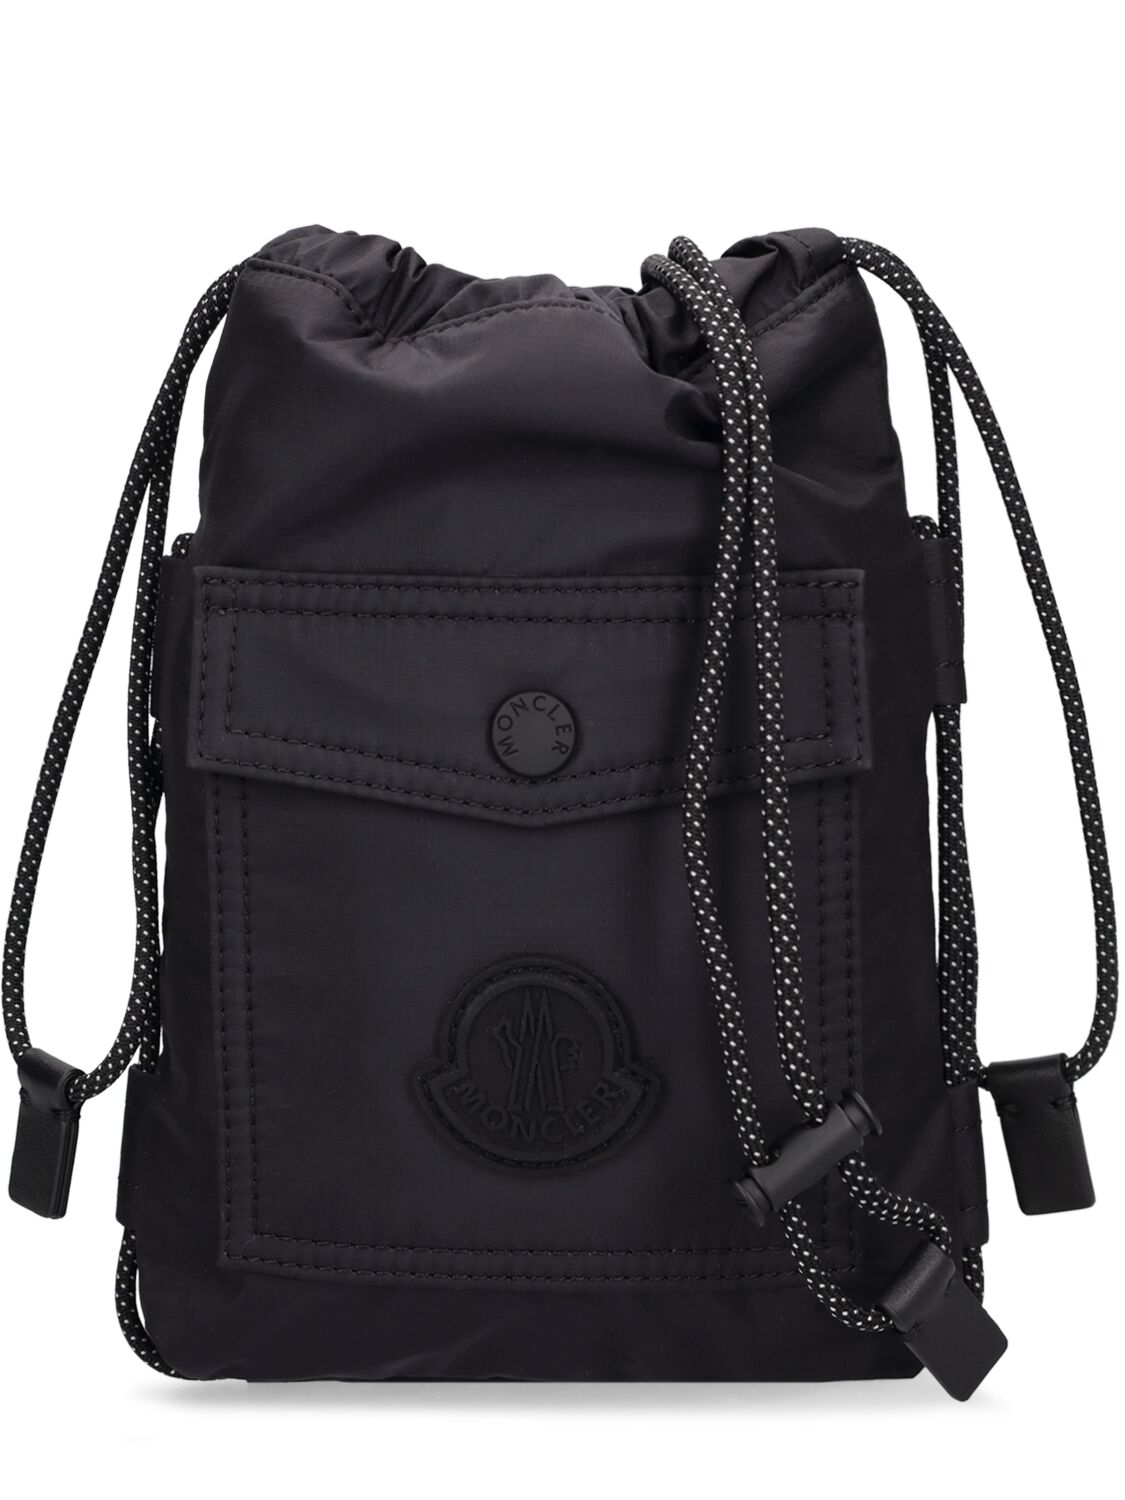 Image of Makaio Nylon Crossbody Bag